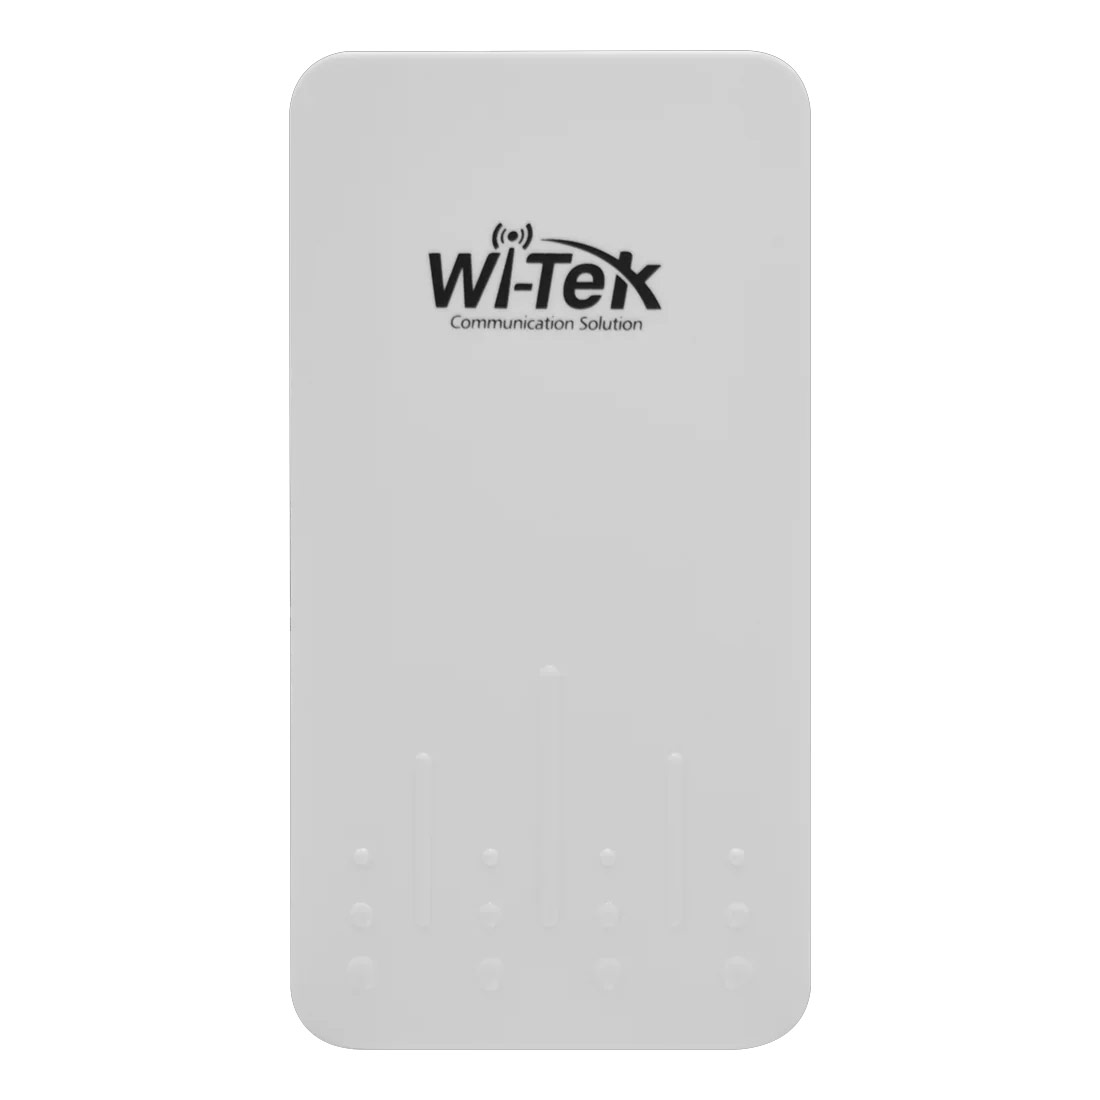 Wi-Tek WI-PE41E-O - Outdoor PoE Extender, 1x PoE Input, 3x PoE Outputs, IP65, Pole Mount, 802.3af/at/bt compatible